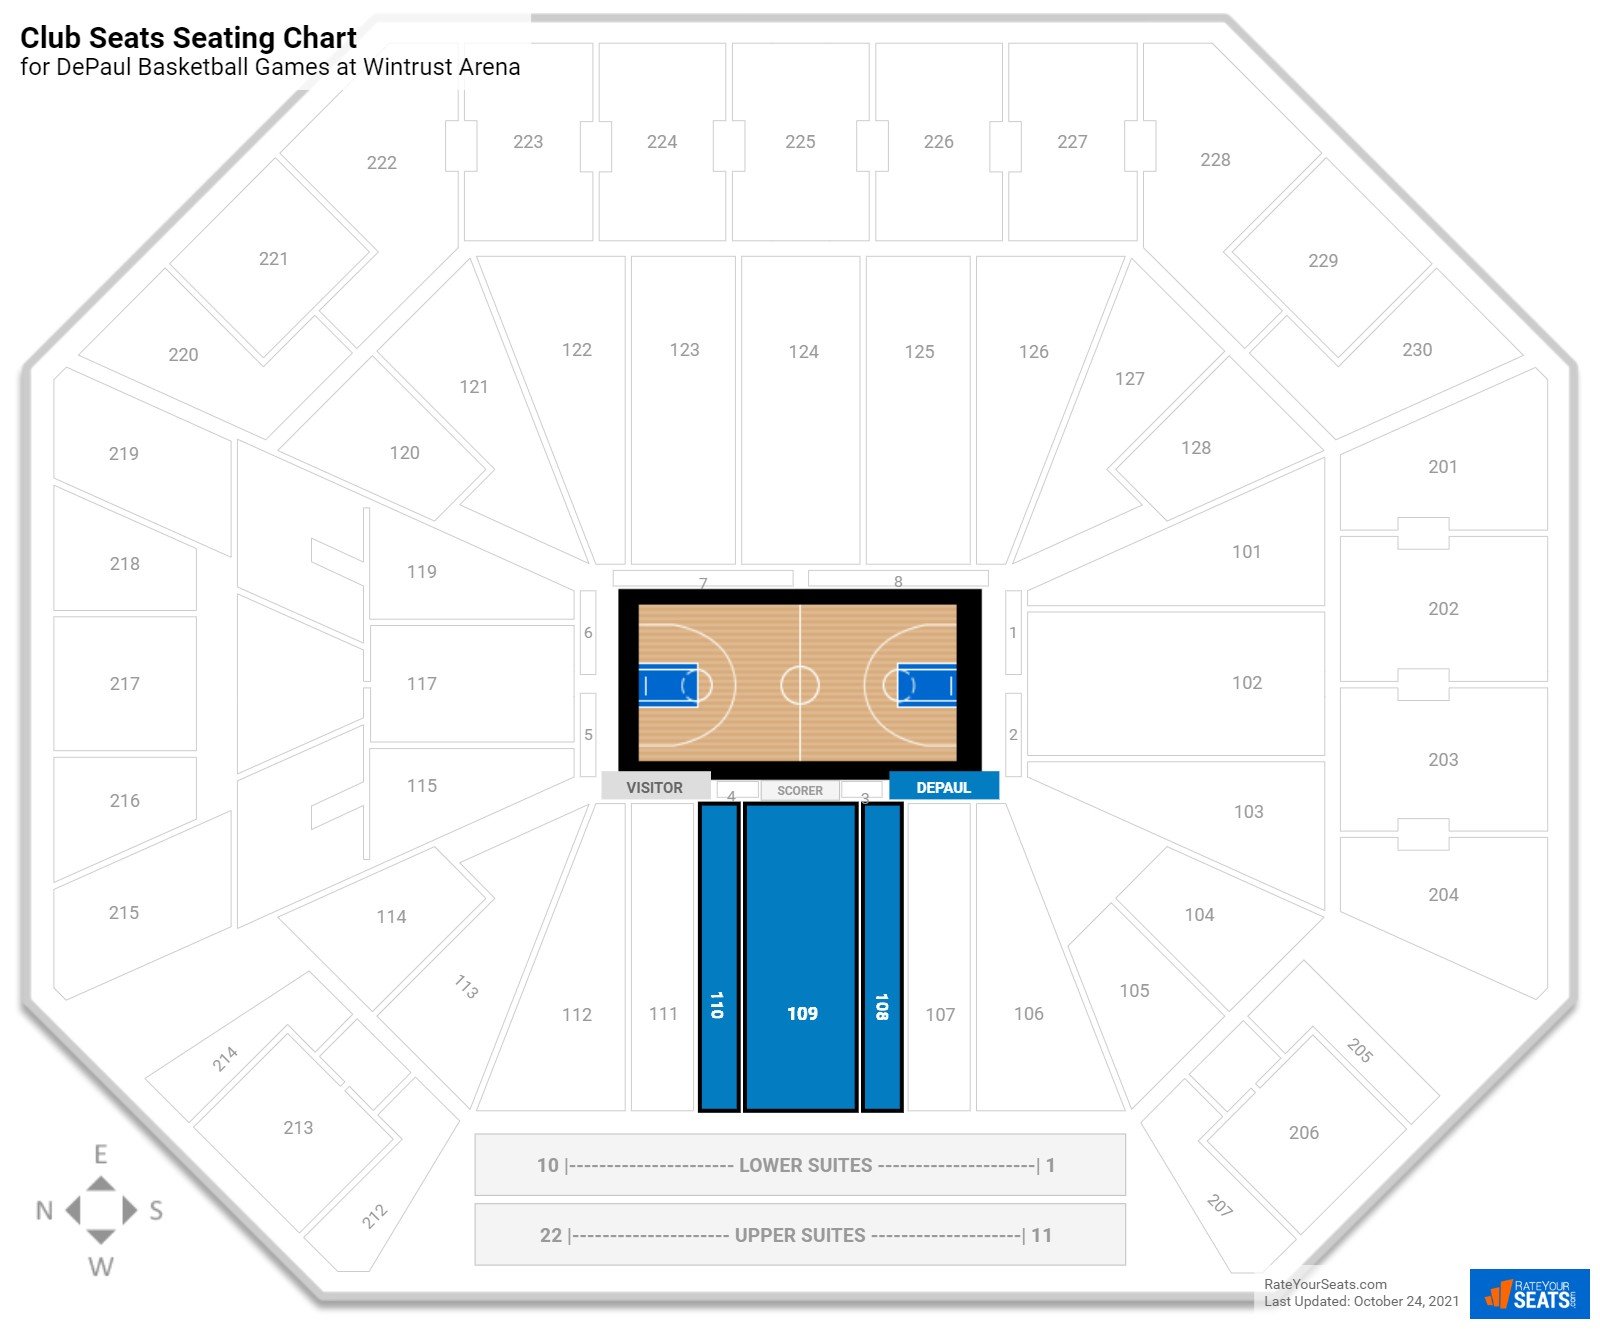 DePaul Club Seats Seating Chart at Wintrust Arena